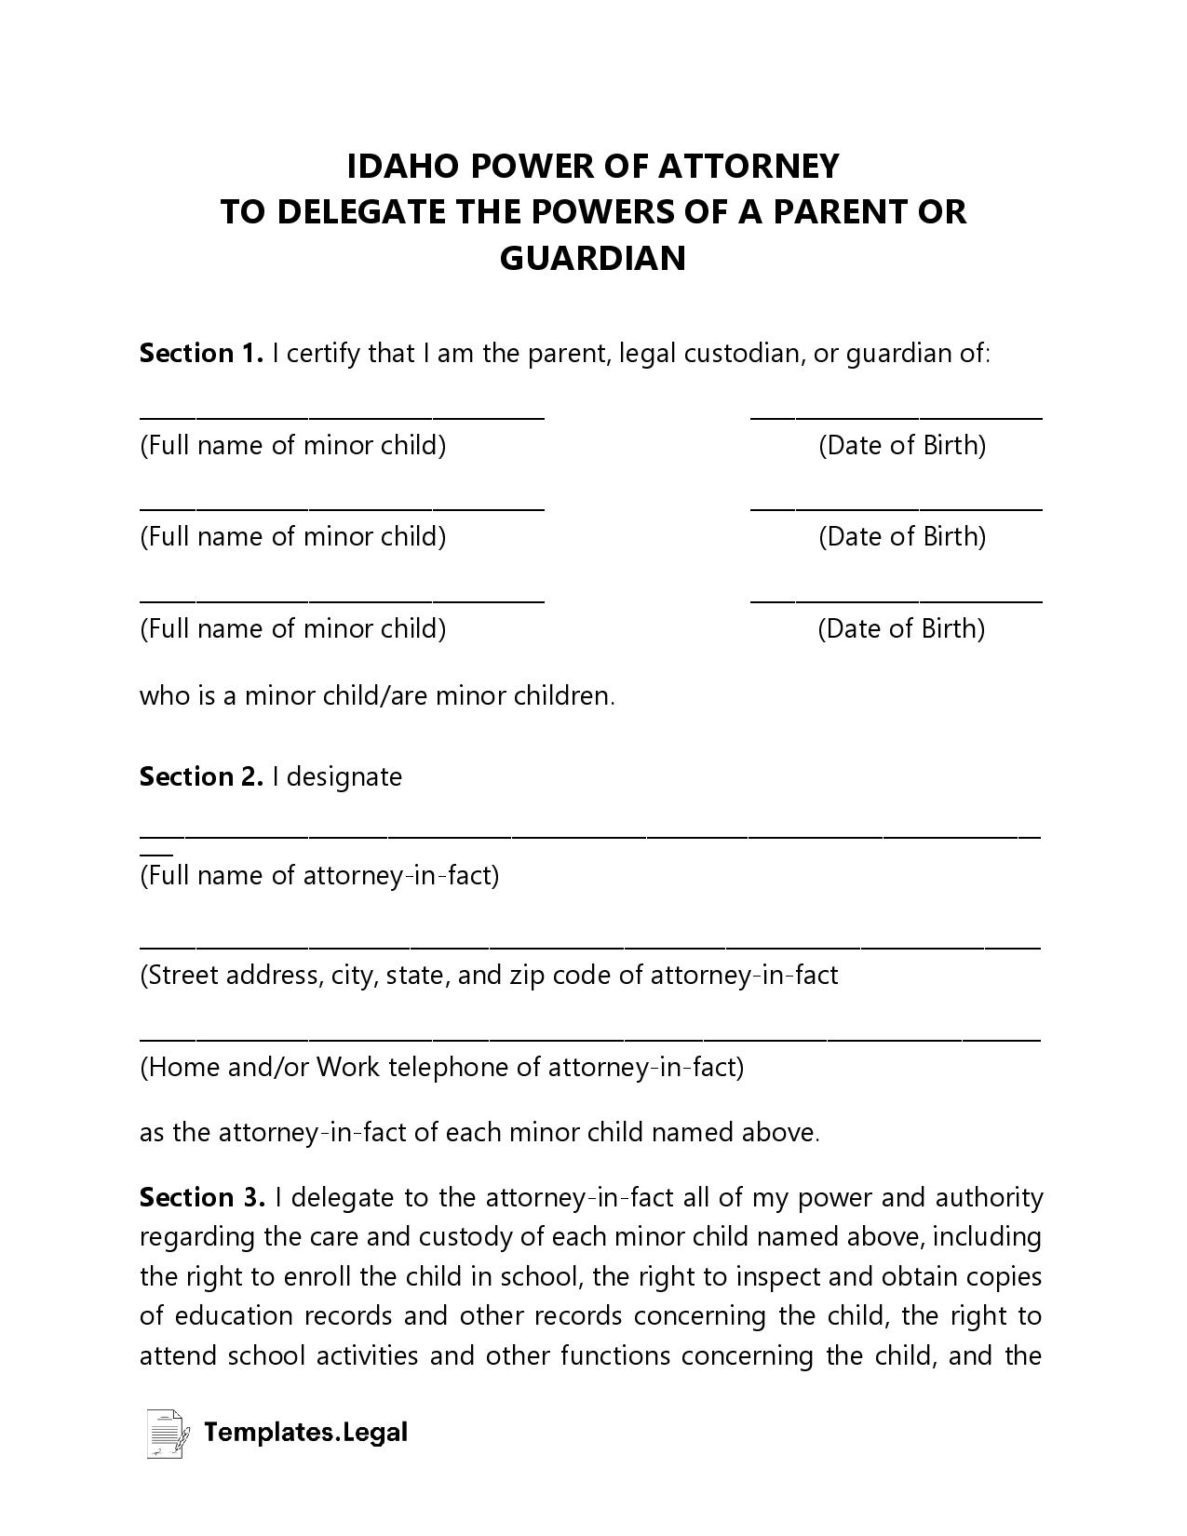 Idaho Power of Attorney Templates (Free) Word PDF ODT